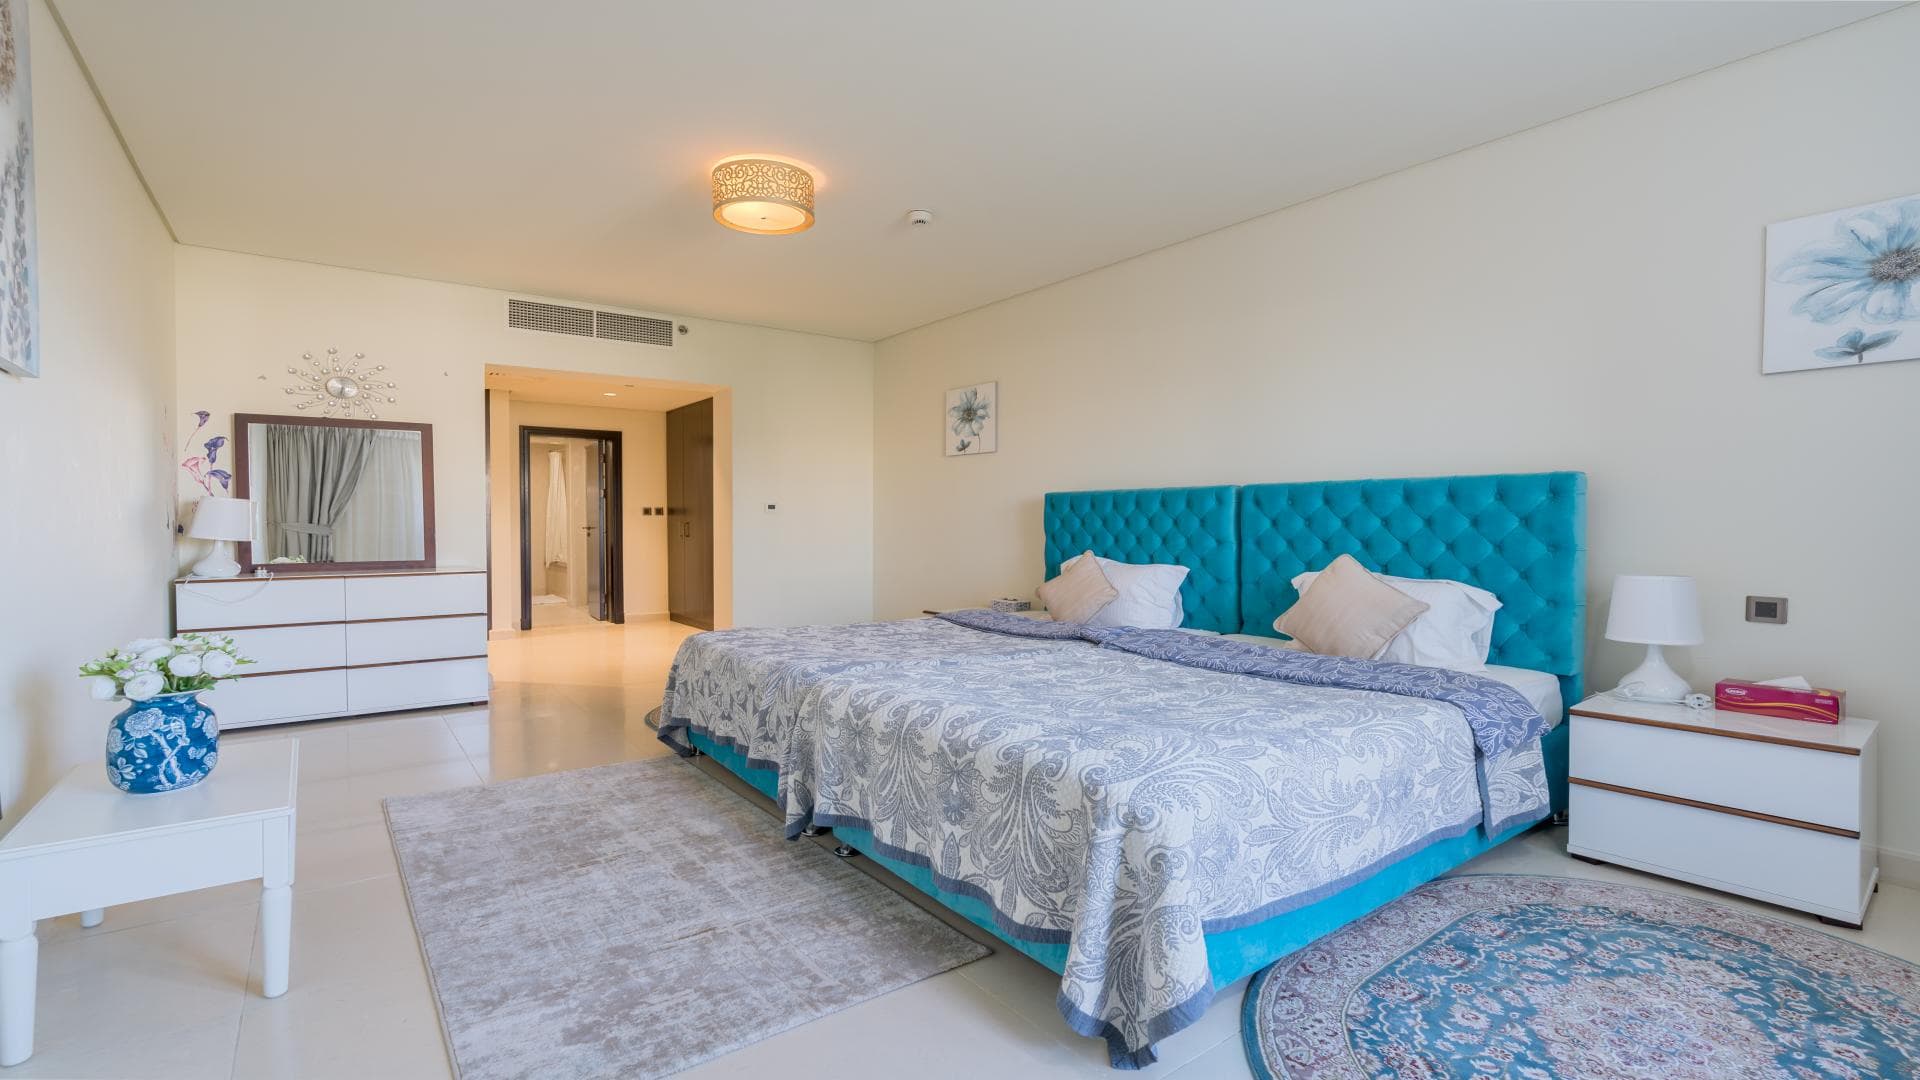 2 Bedroom Apartment For Rent Kingdom Of Sheba Lp19542 2408c2e60b84b200.jpg